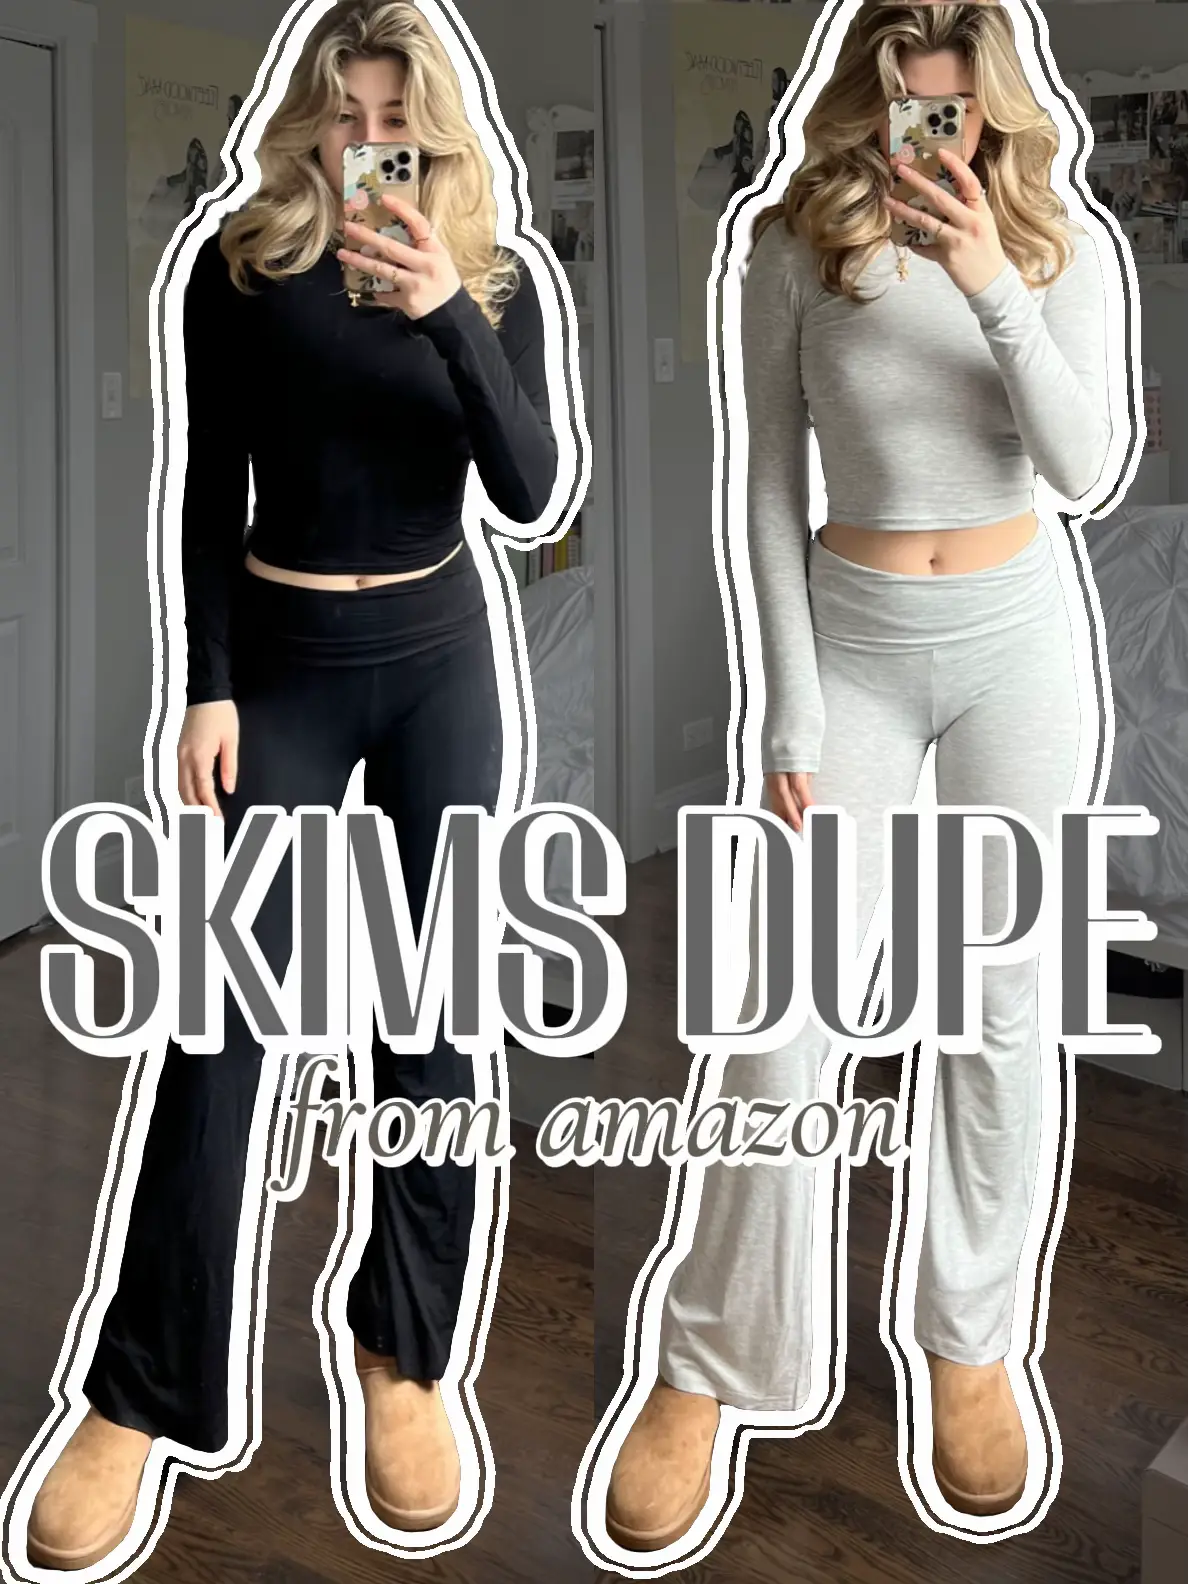 I'm an  fan - I found SKIMS bodysuit dupes for $36 less